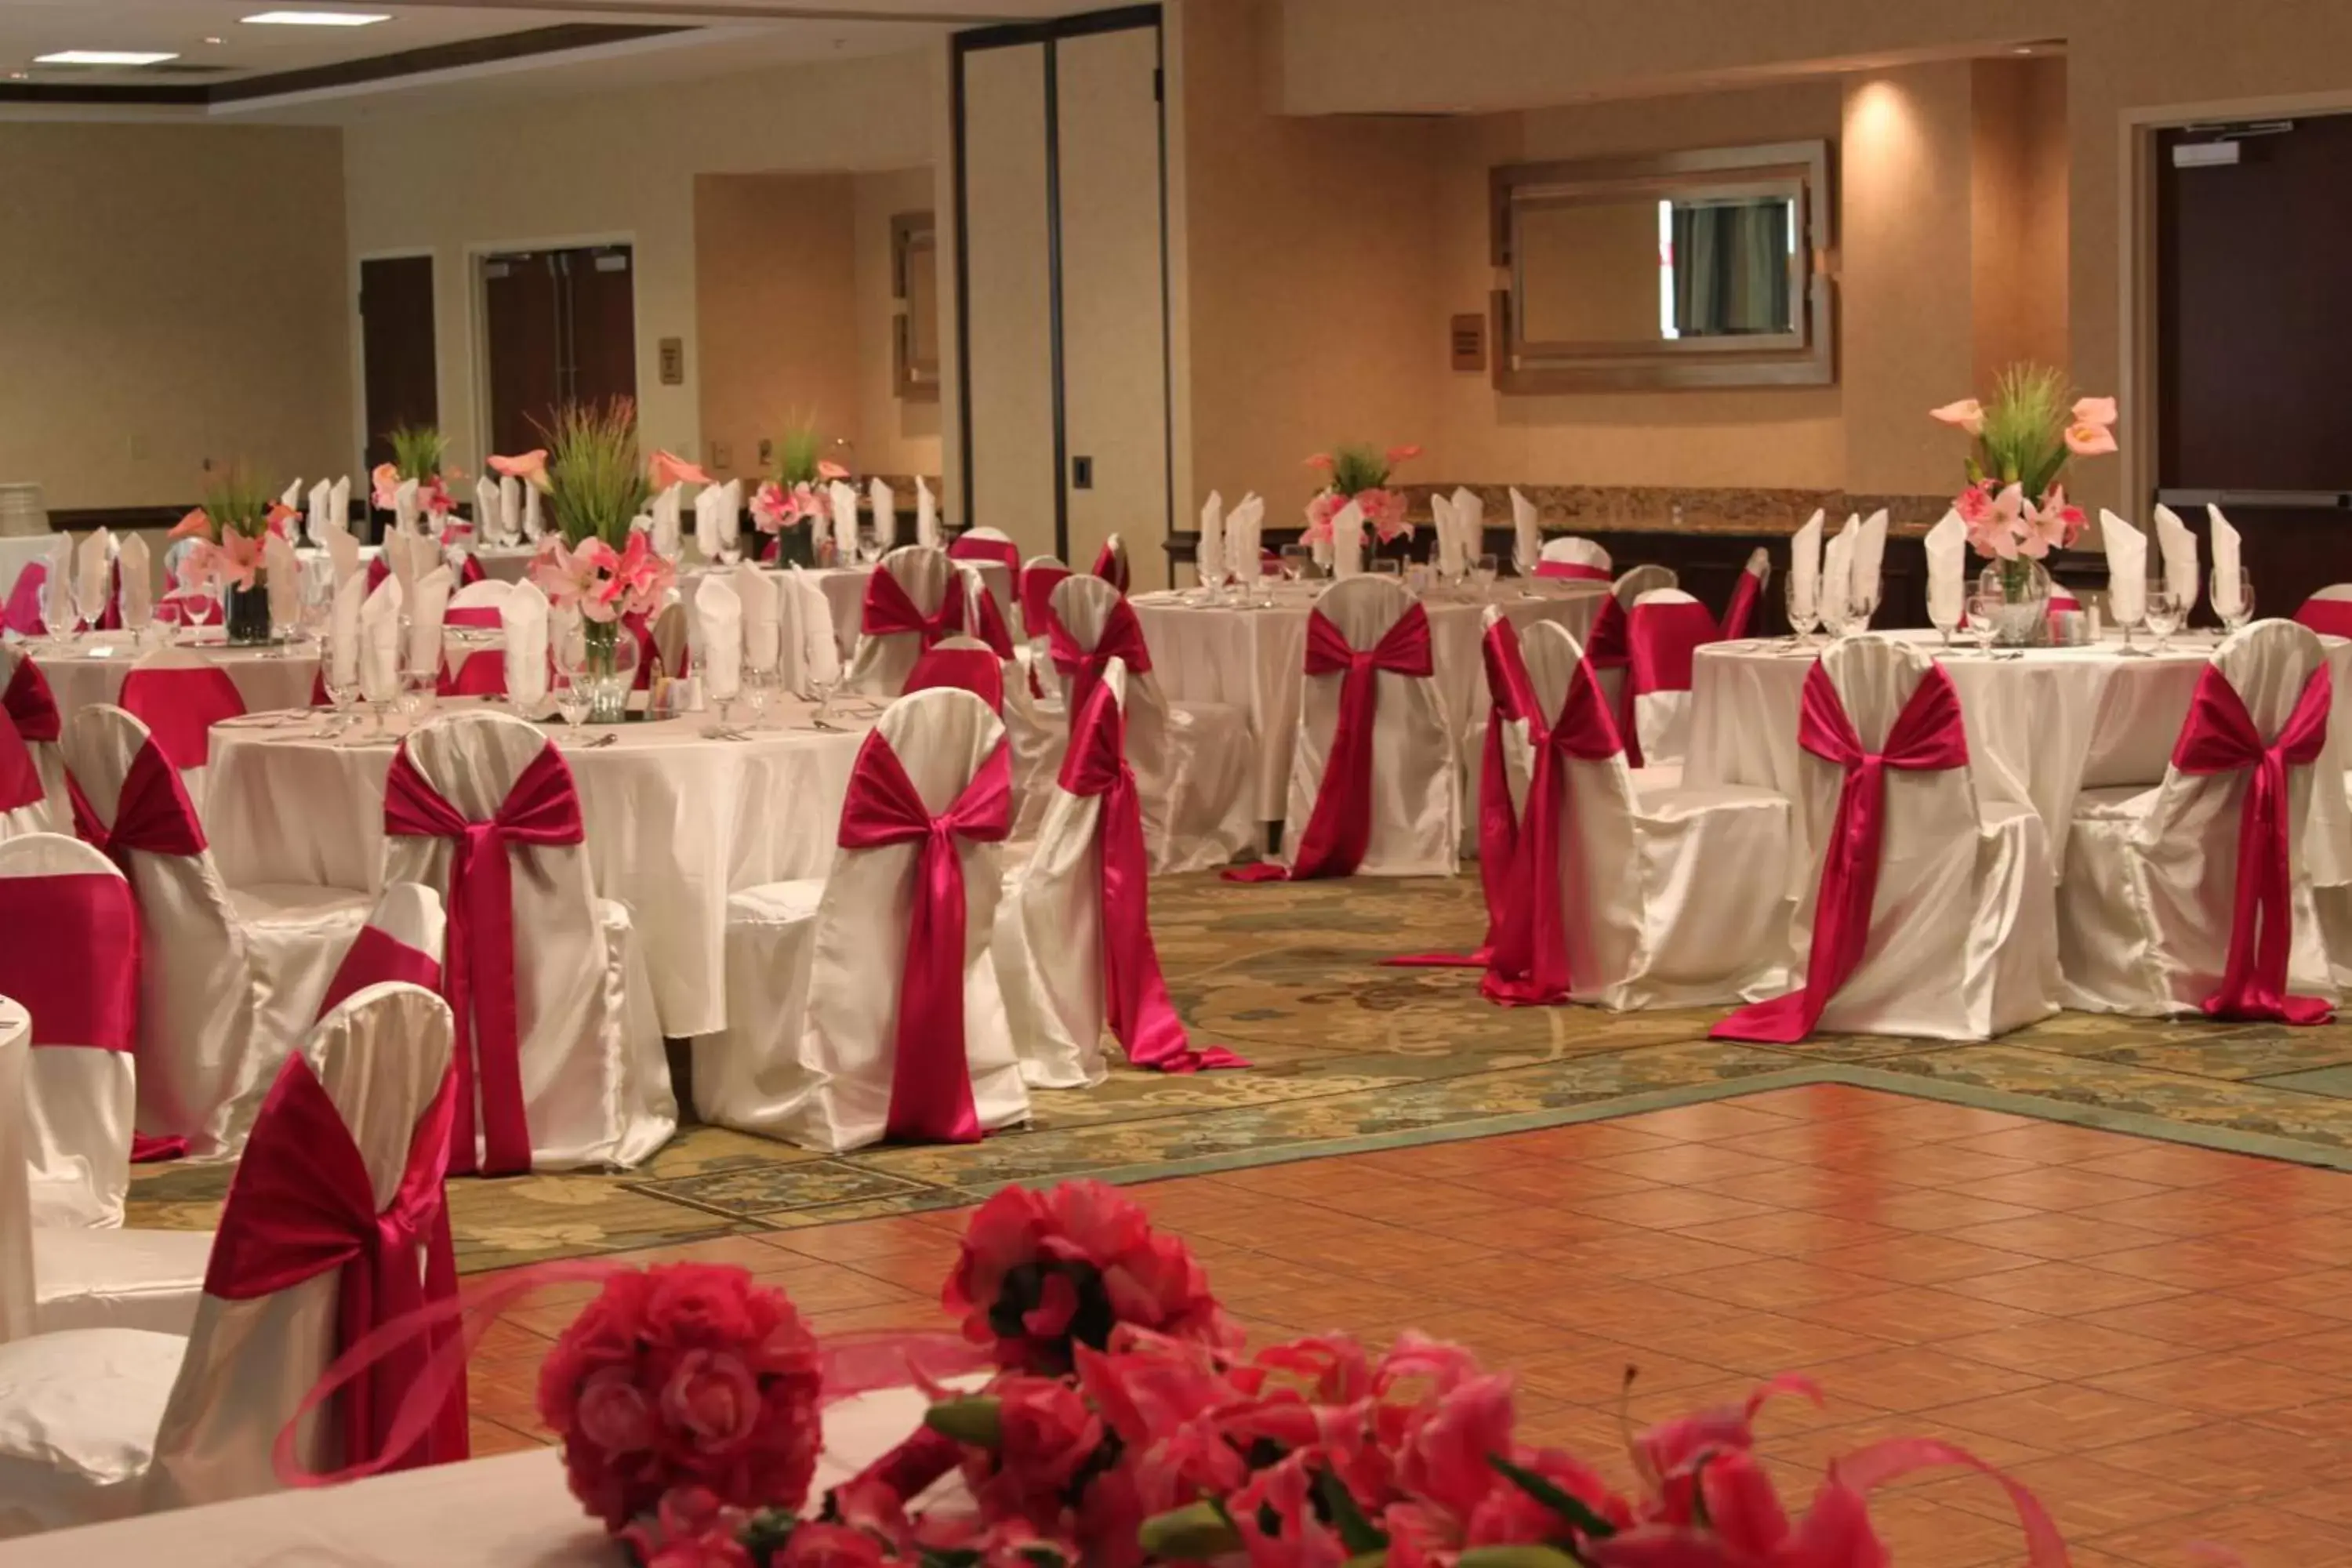 Meeting/conference room, Banquet Facilities in Hilton Garden Inn Valdosta